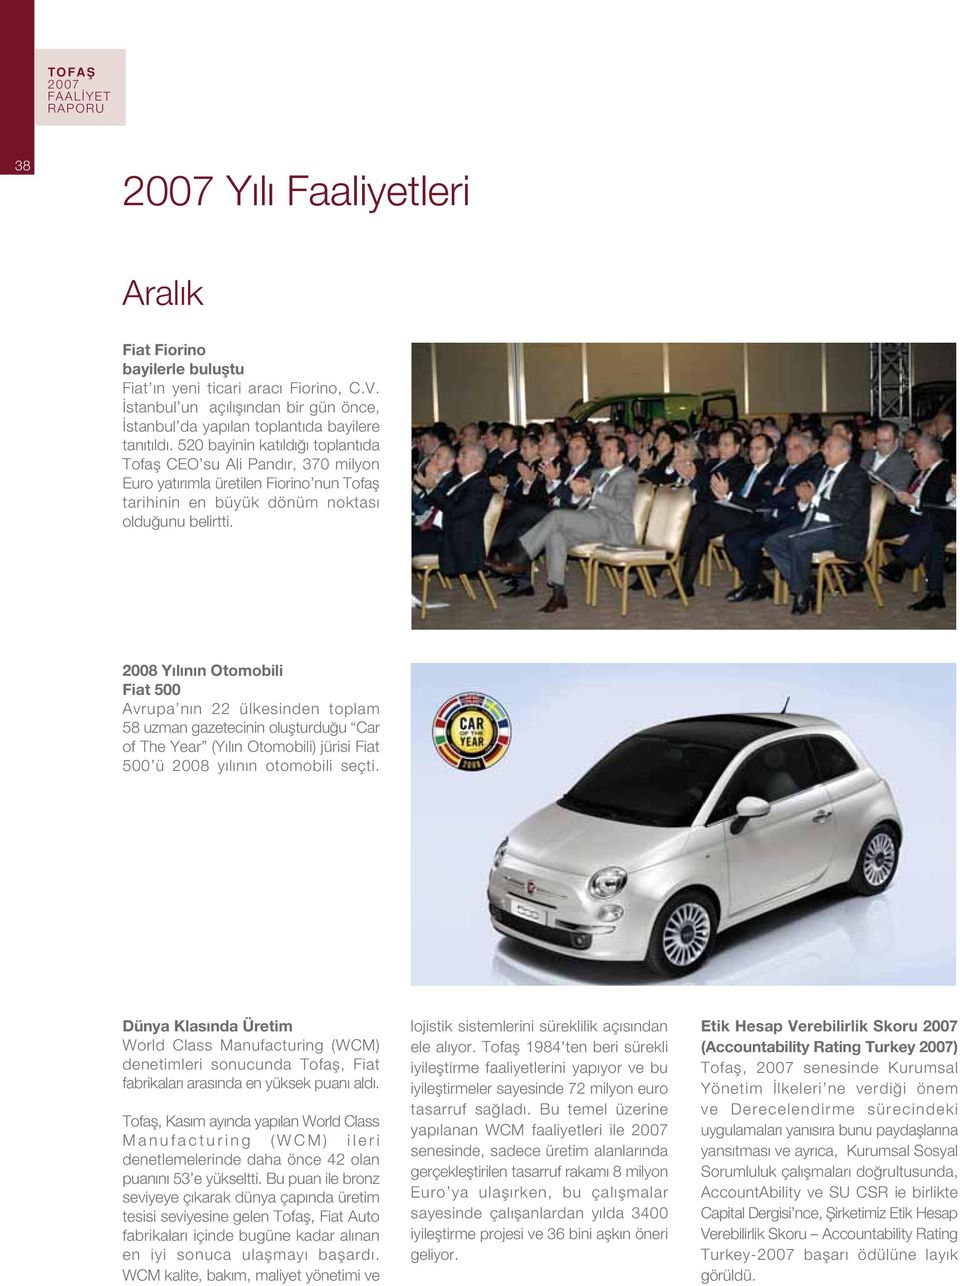 2008 Y l n n Otomobili Fiat 500 Avrupa n n 22 ülkesinden toplam 58 uzman gazetecinin oluflturdu u Car of The Year (Y l n Otomobili) jürisi Fiat 500 ü 2008 y l n n otomobili seçti.